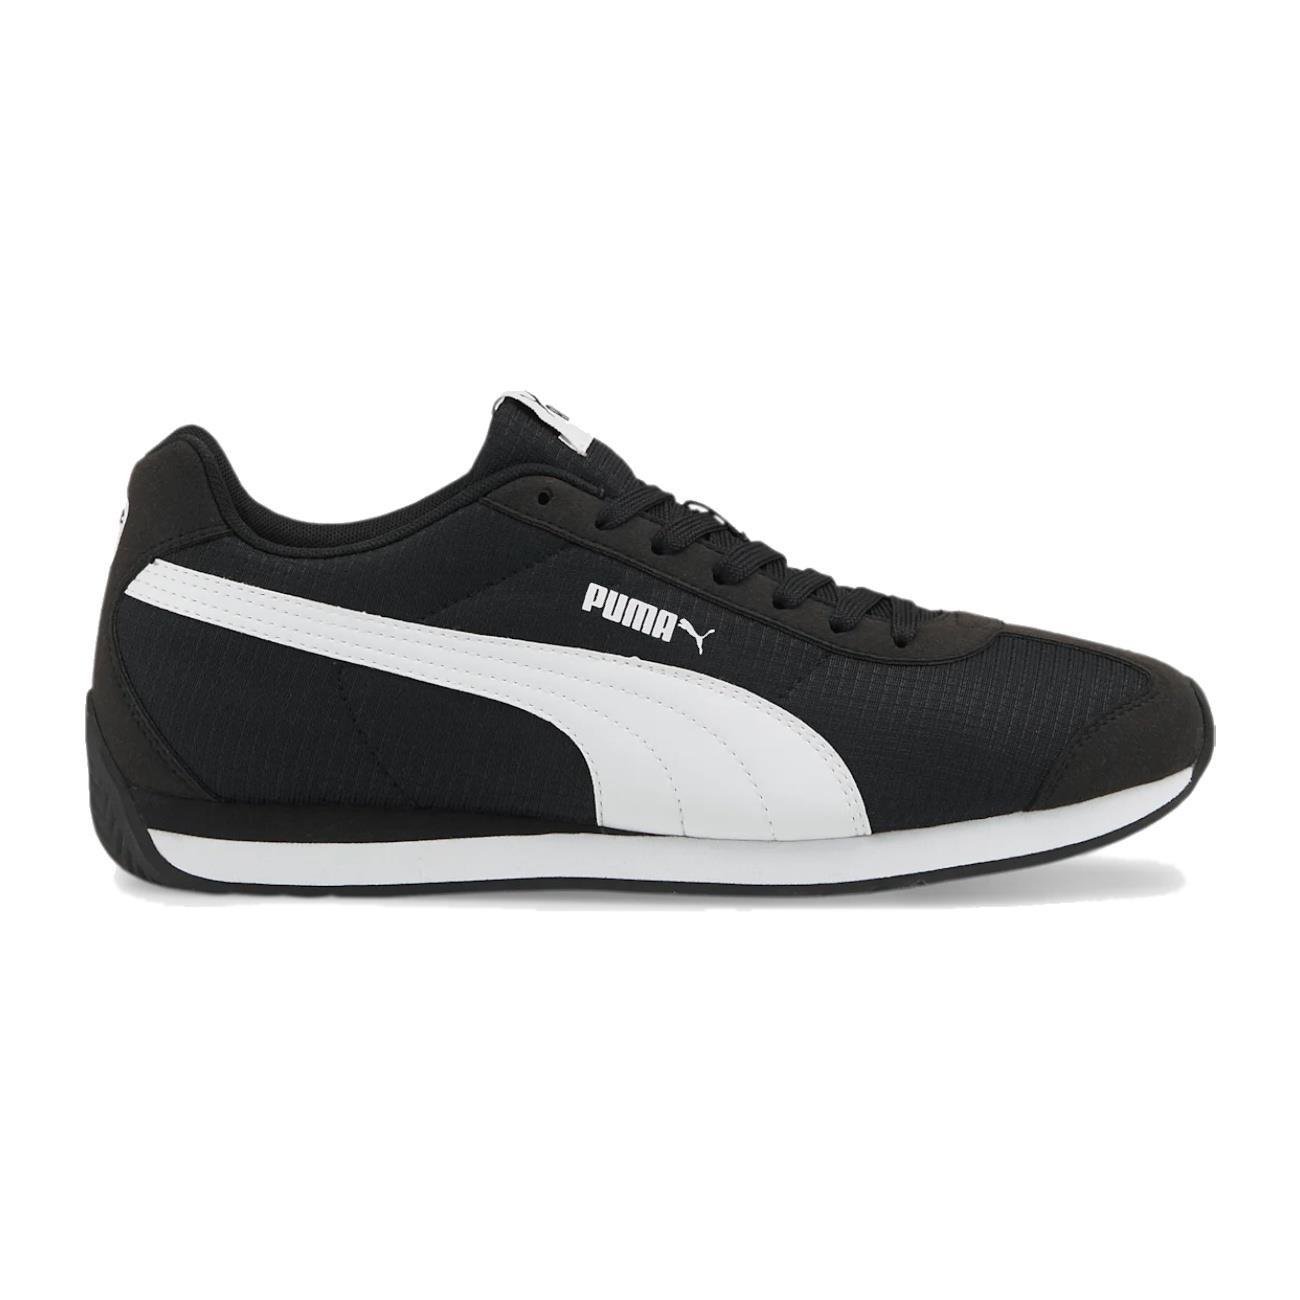 Puma 383038 Turin 3 NL Spor Ayakkabı Siyah-Beyaz